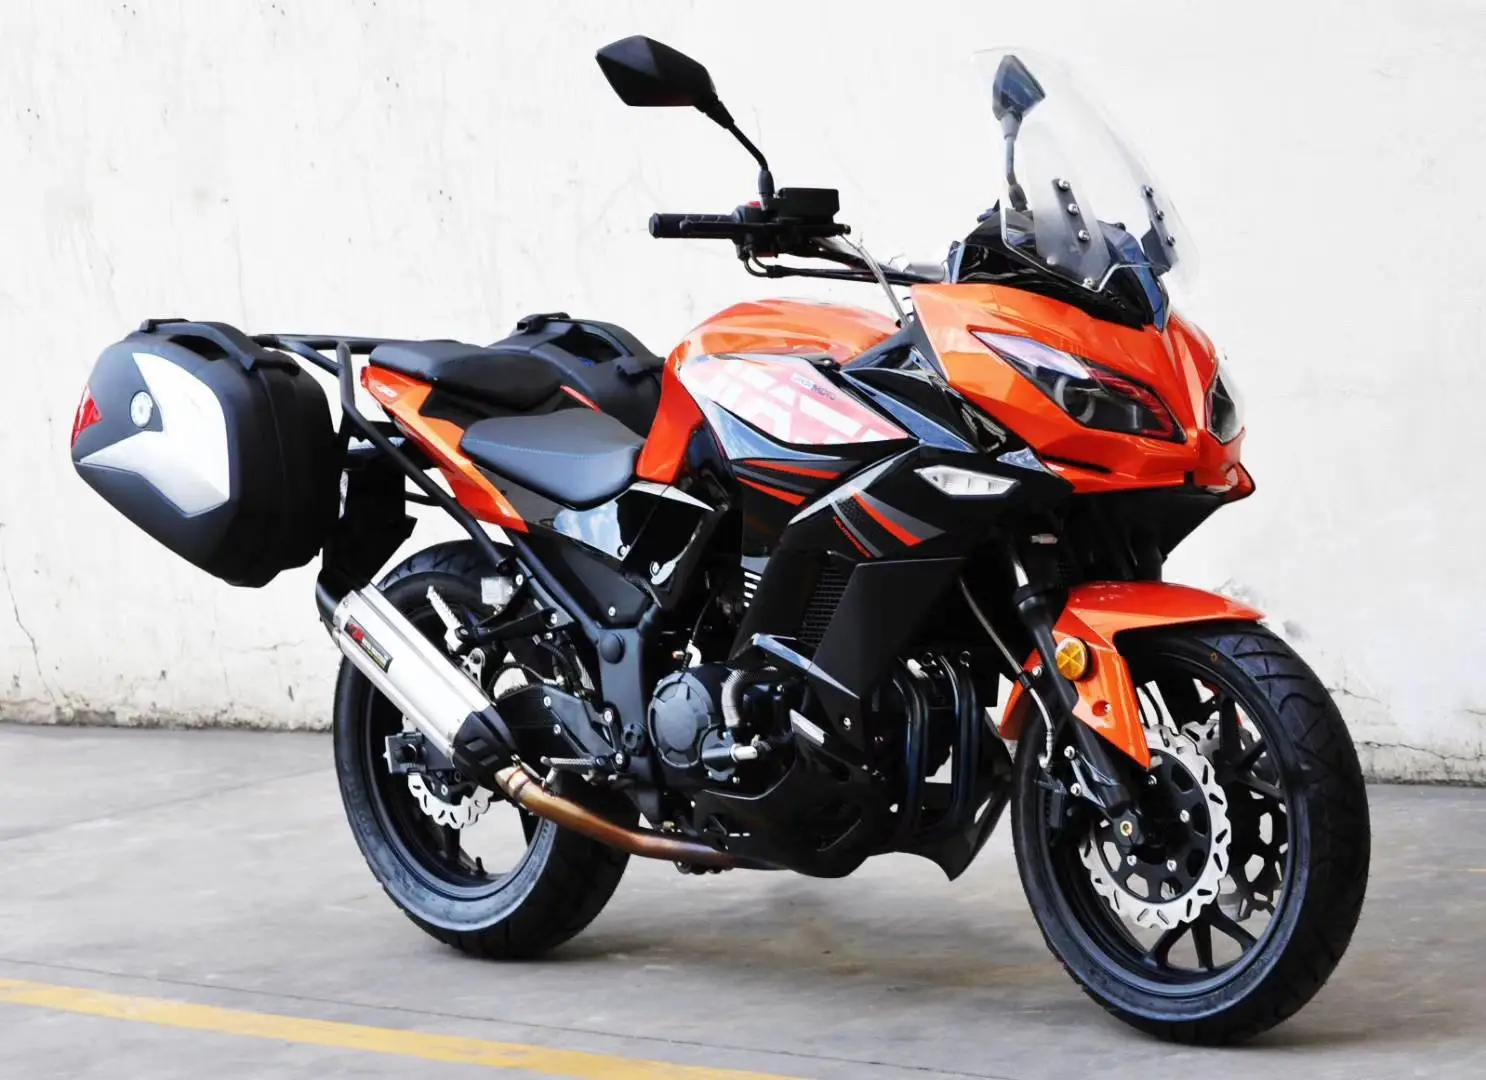 350cc 400cc 高速便宜赛车摩托车hamm Efi 警察摩托车 Buy Super Speed Motorcycle Cheap Motorcycle Cheap New Motorcycles Product On Alibaba Com